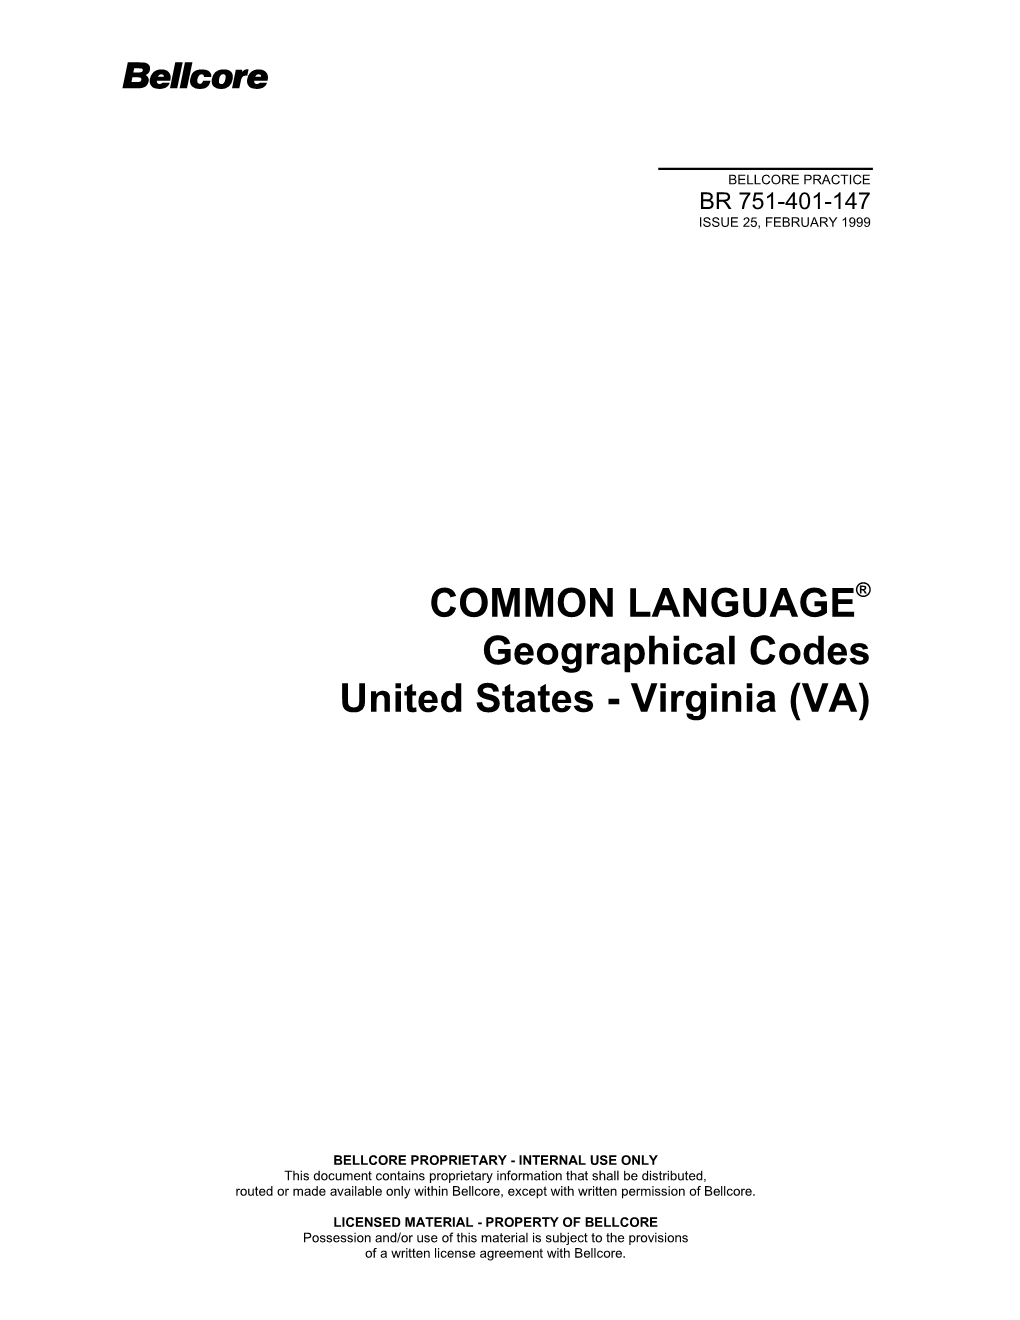 Geographical Codes United States - Virginia (VA)